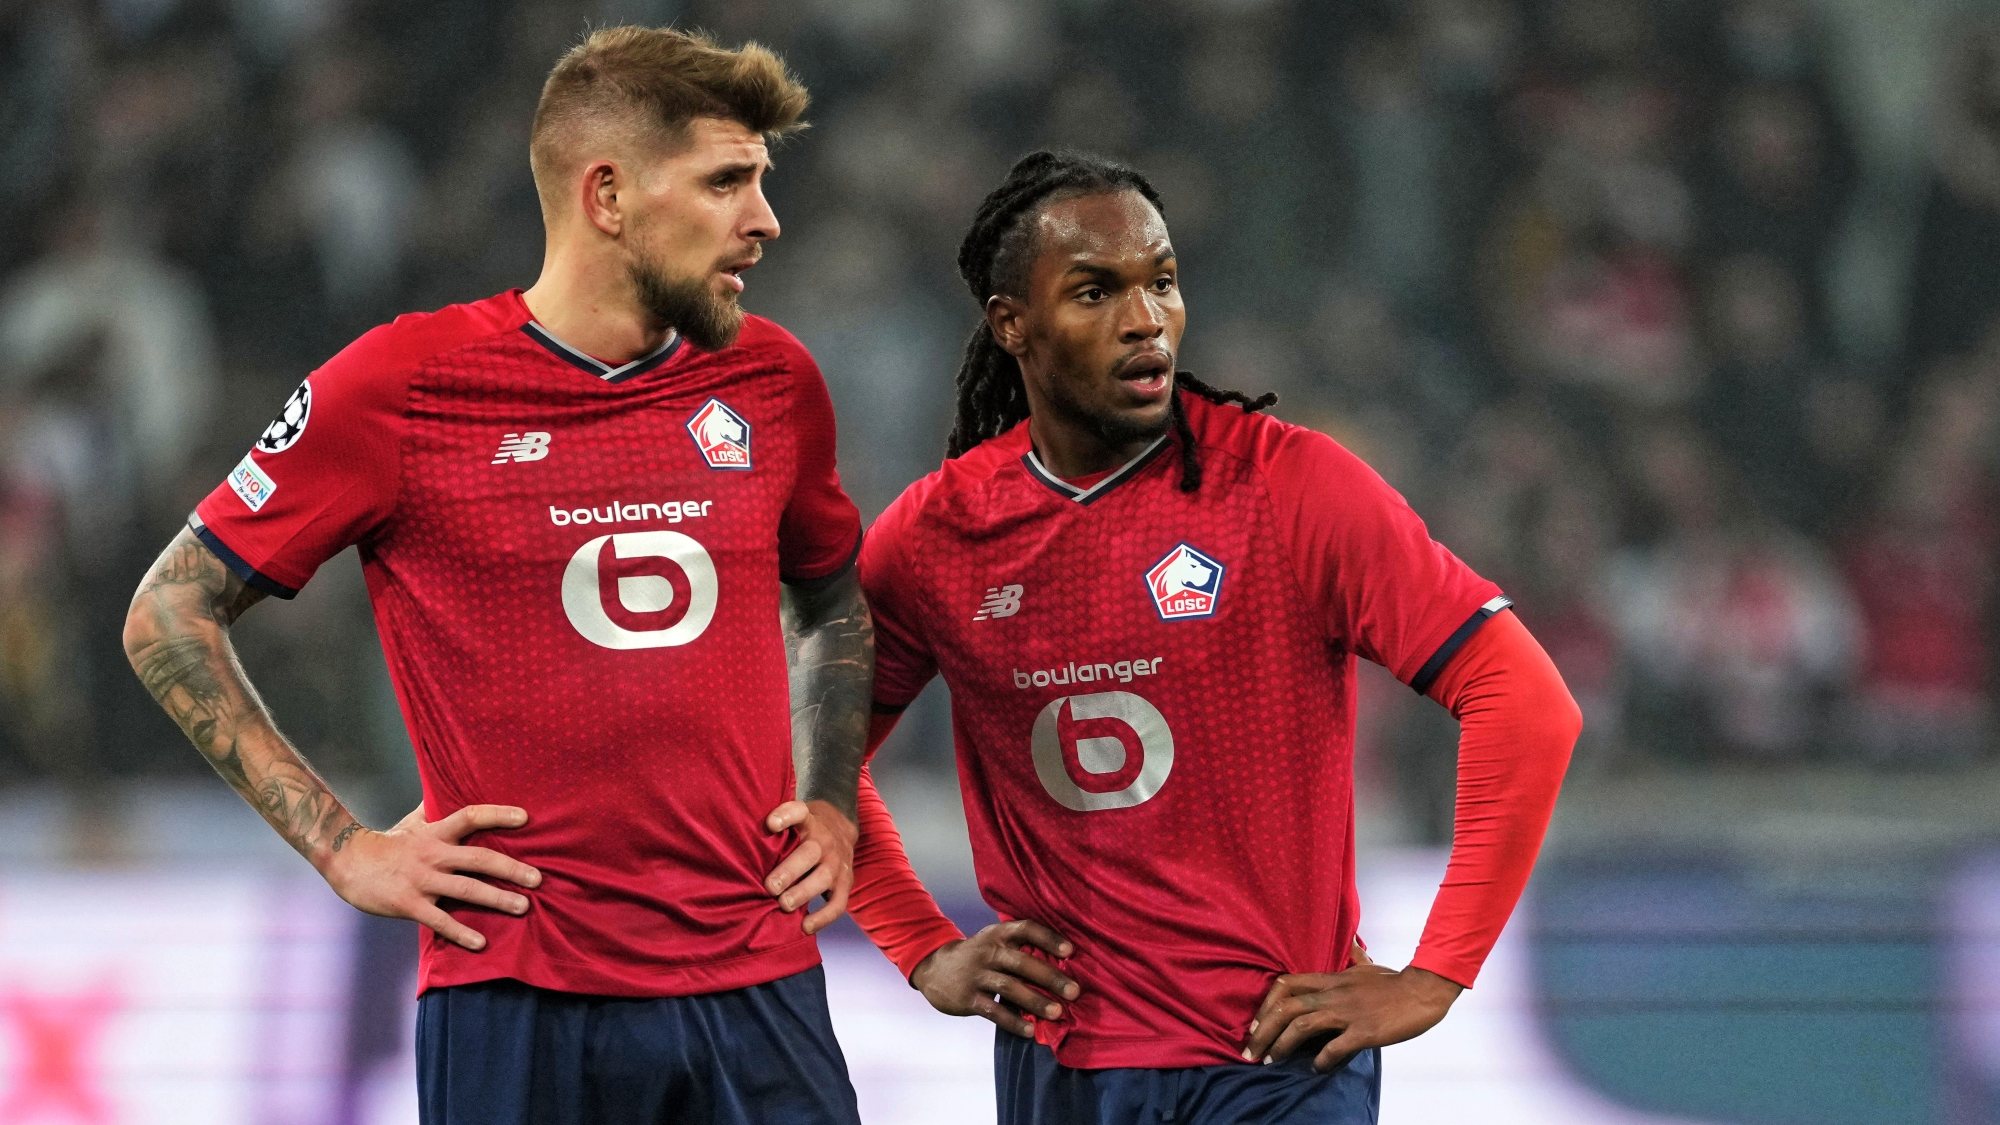 Xeka e Renato Sanches marcaram os dois golos do Lille na vitória frente ao Rennes que valeu a subida ao 12.º lugar